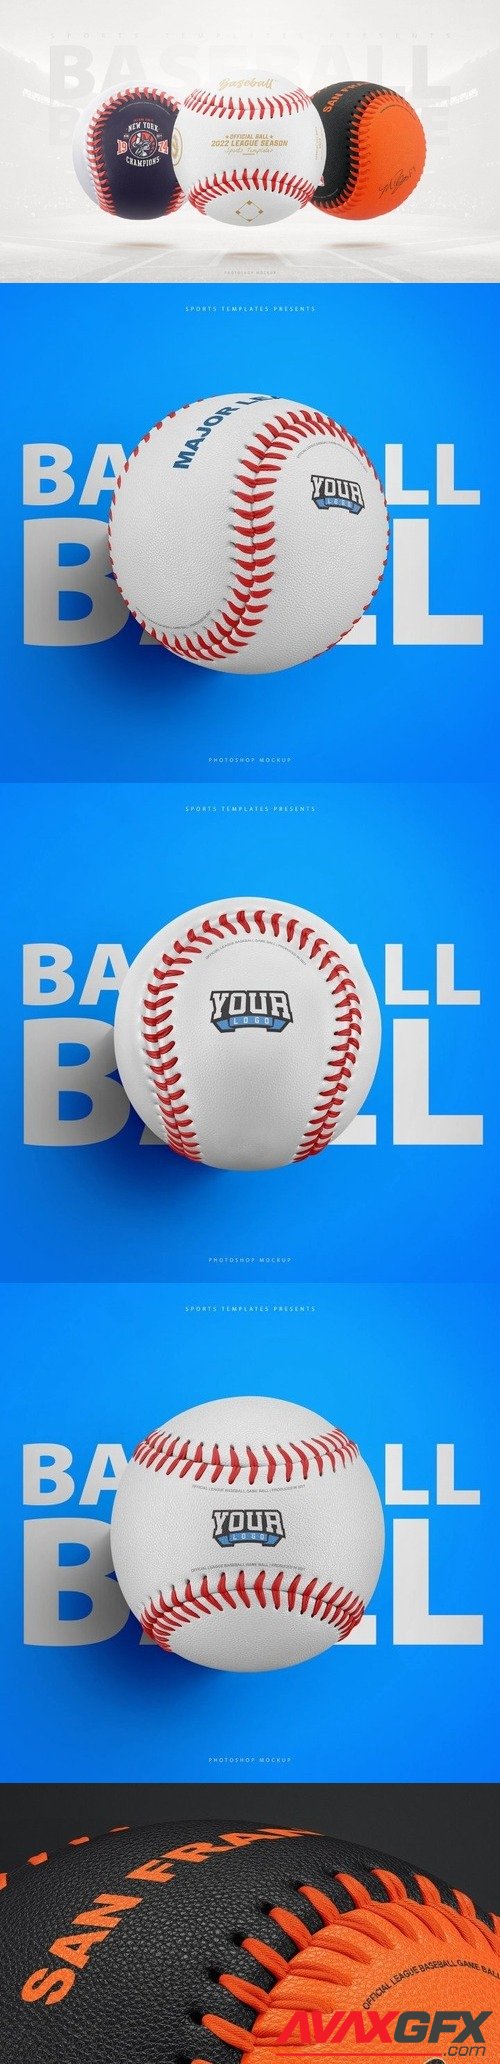 Baseball Ball Photoshop Template